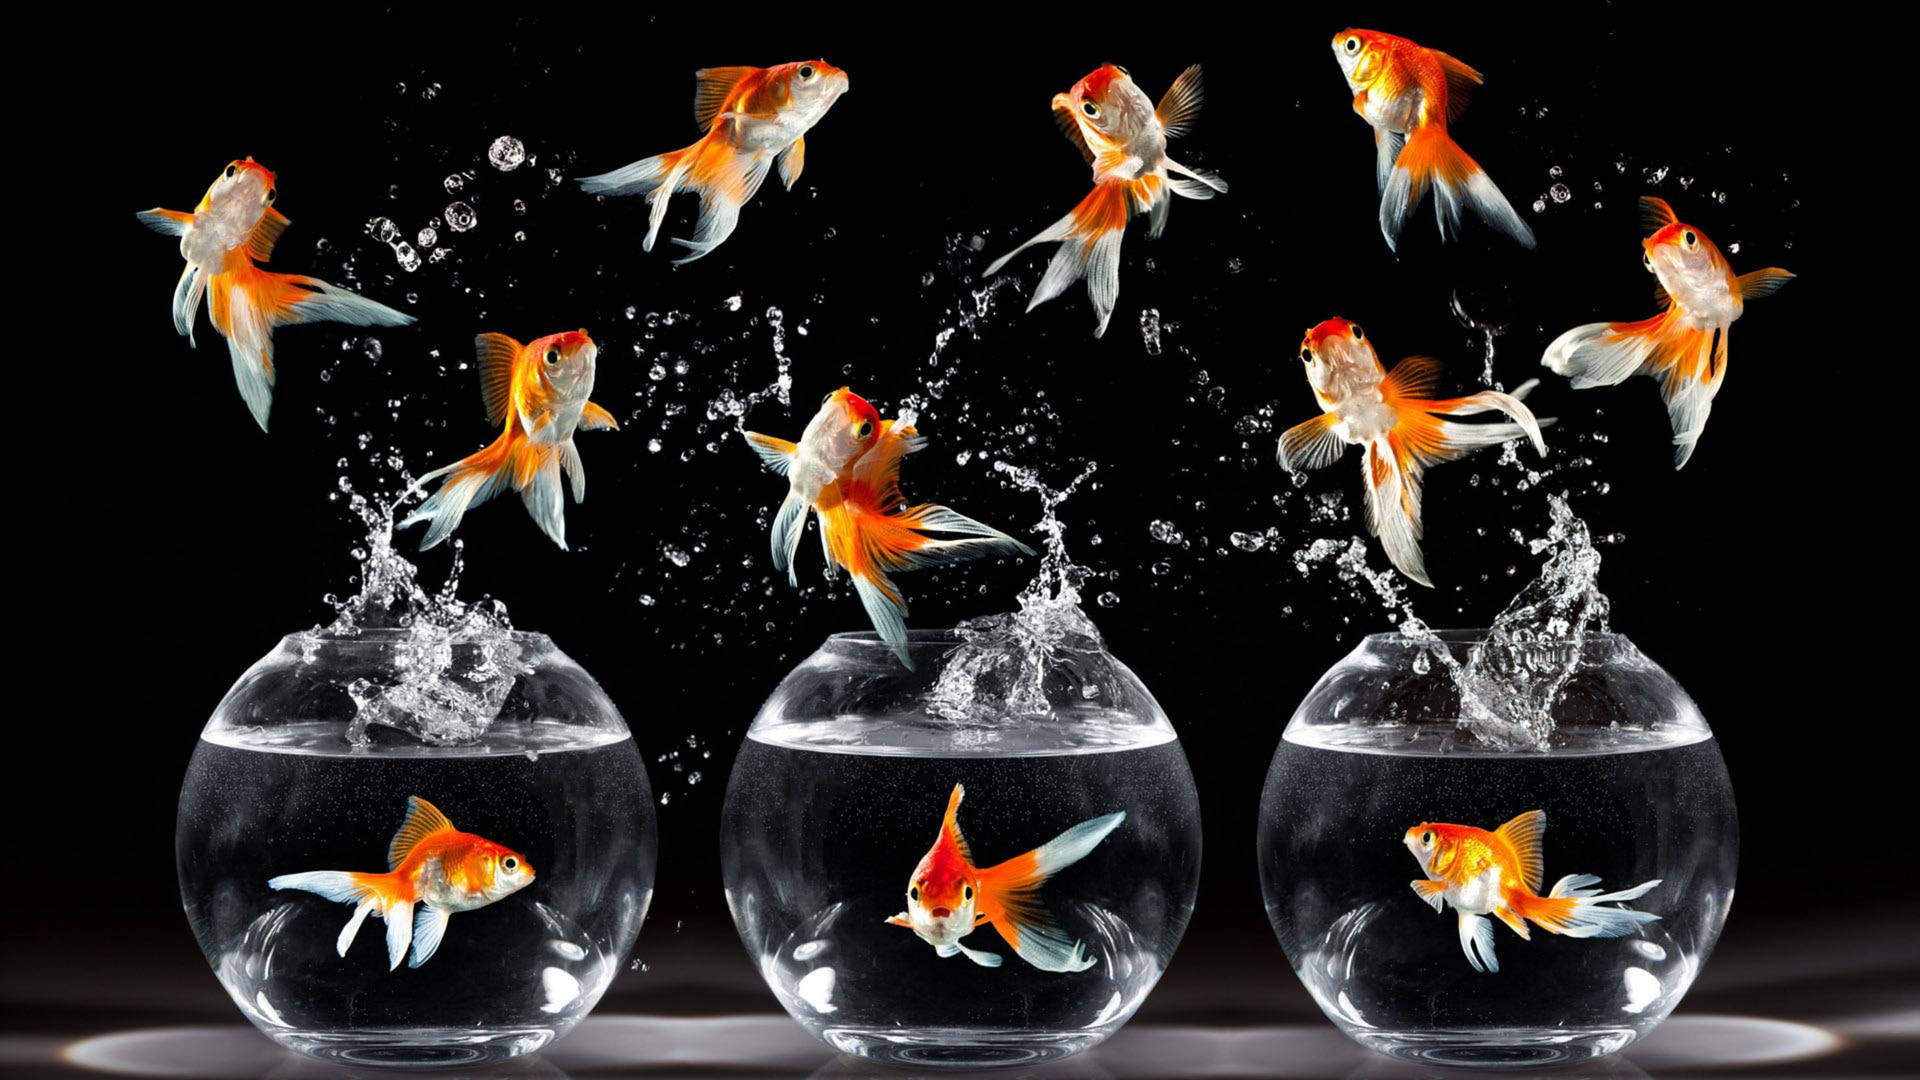 Share 78+ goldfish wallpaper latest